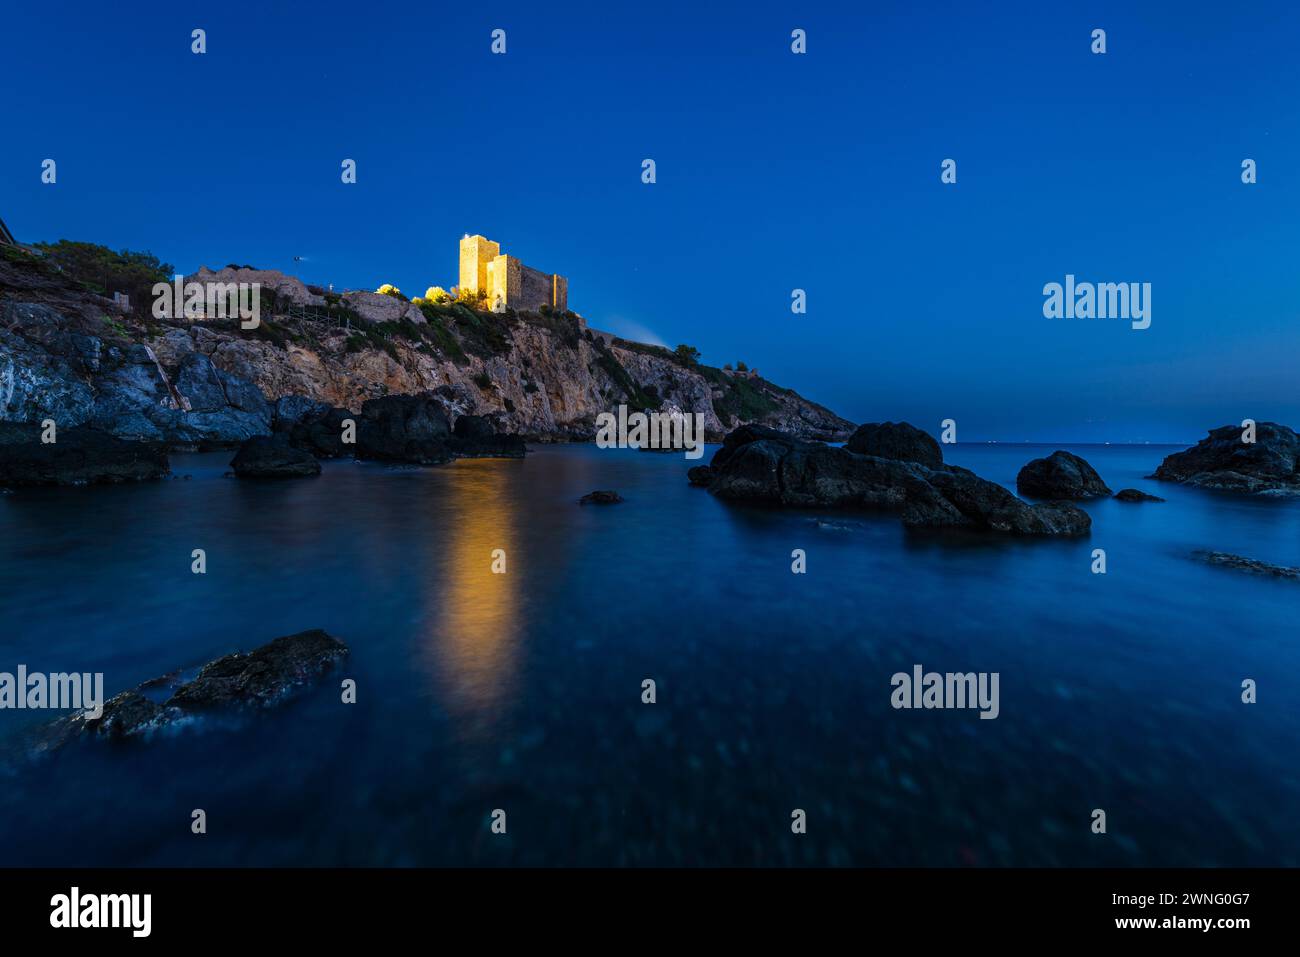 The Rocca Aldobrandesca castle on the rocky coast of Maremma in Talamone in the twilight of dusk, Tuscany, Italy Stock Photo